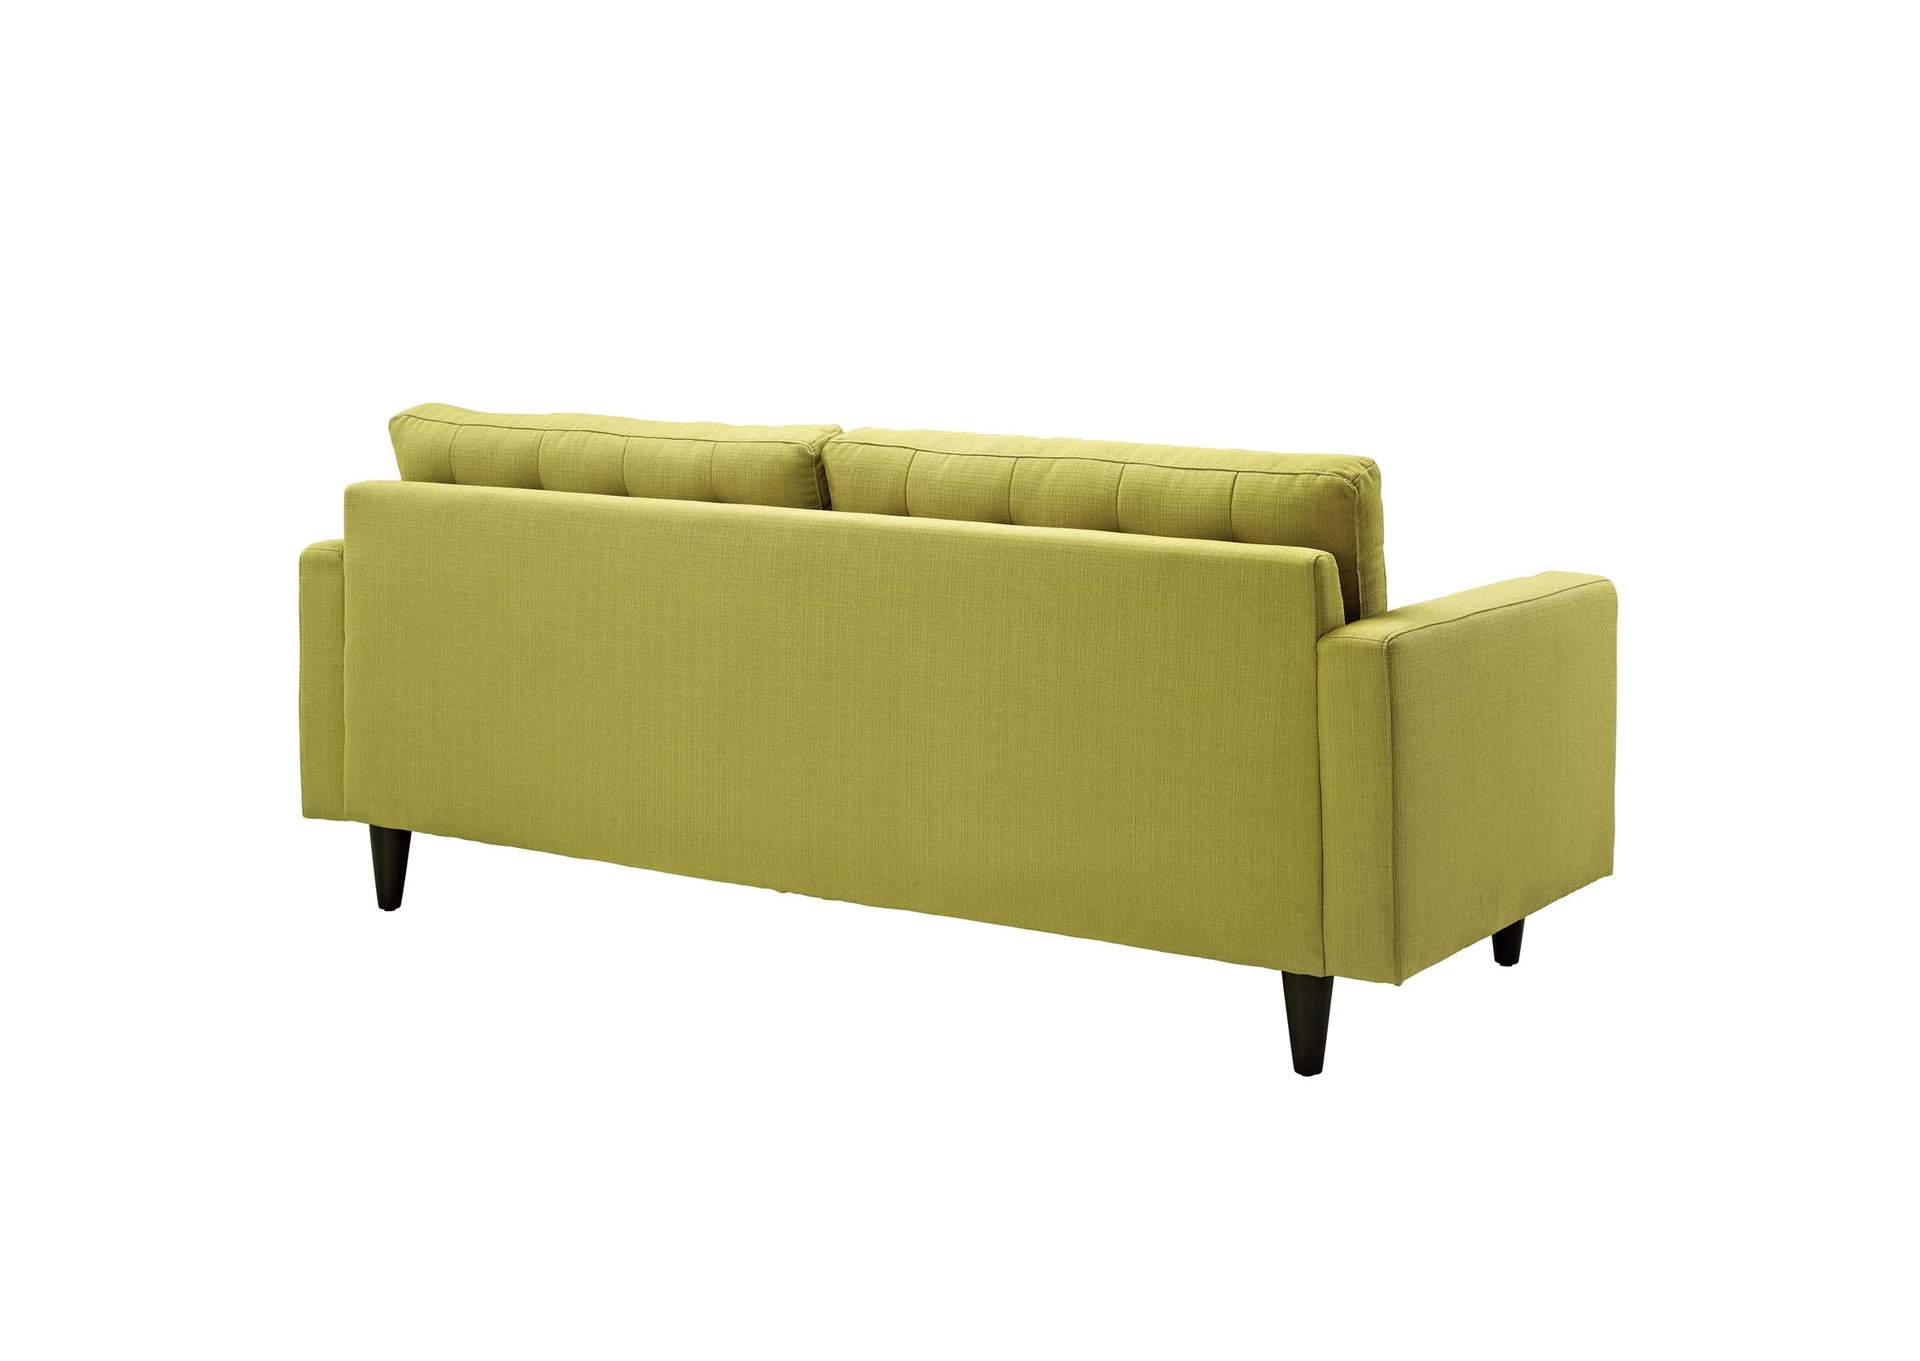 Wheatgrass Empress Upholstered Fabric Sofa,Modway